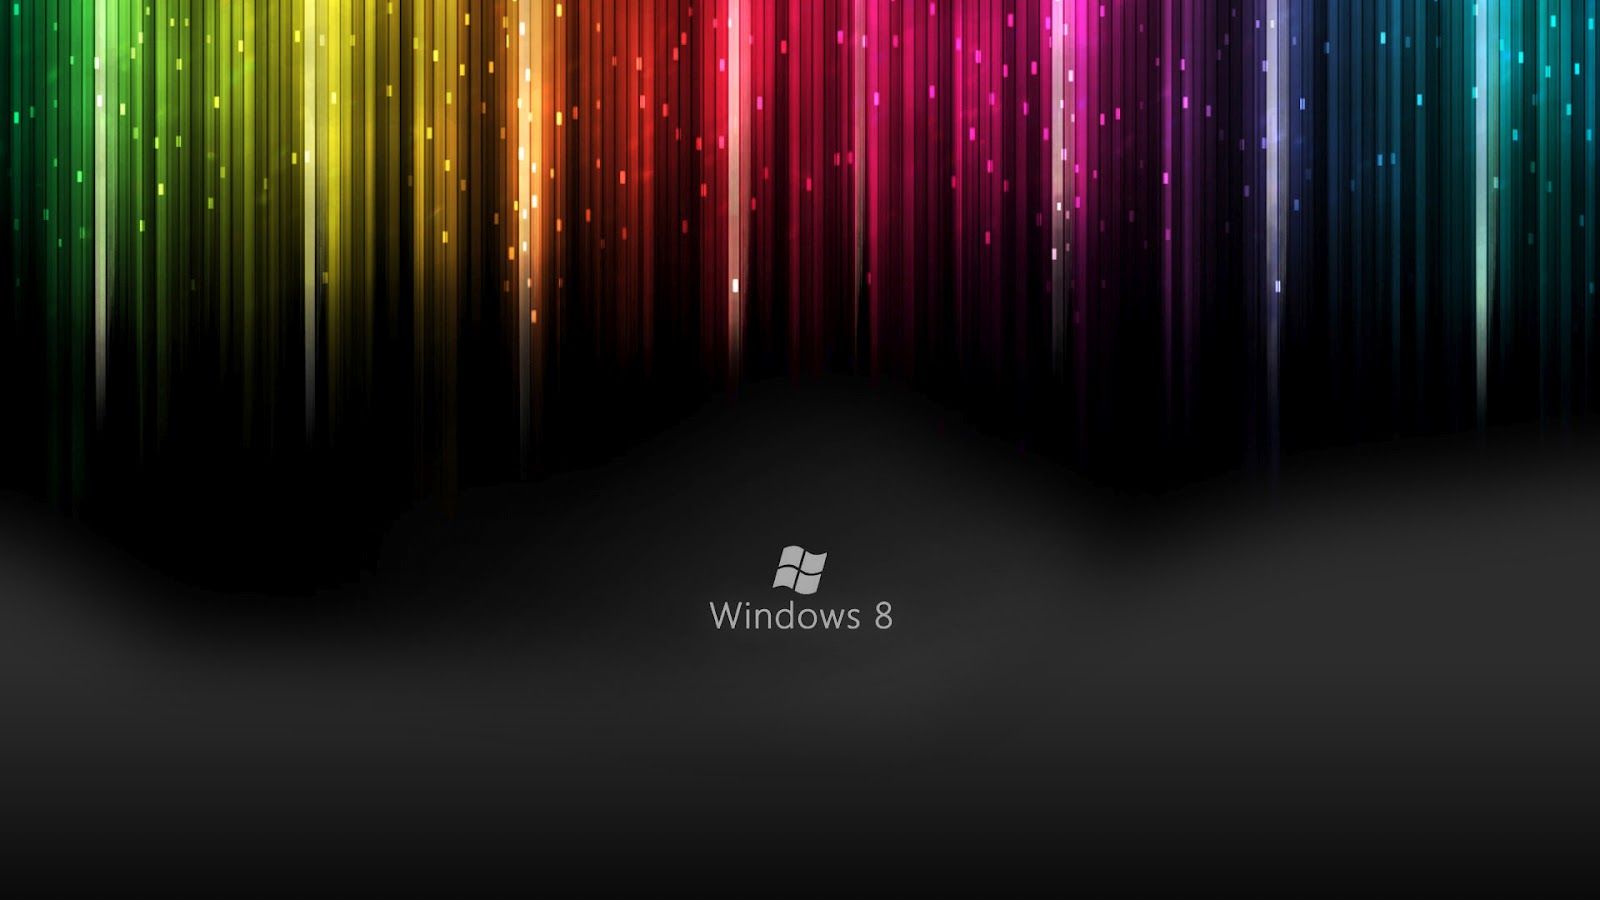 Windows 8 Wallpaper Hd 1080P Download 13 Amazing Trends 100